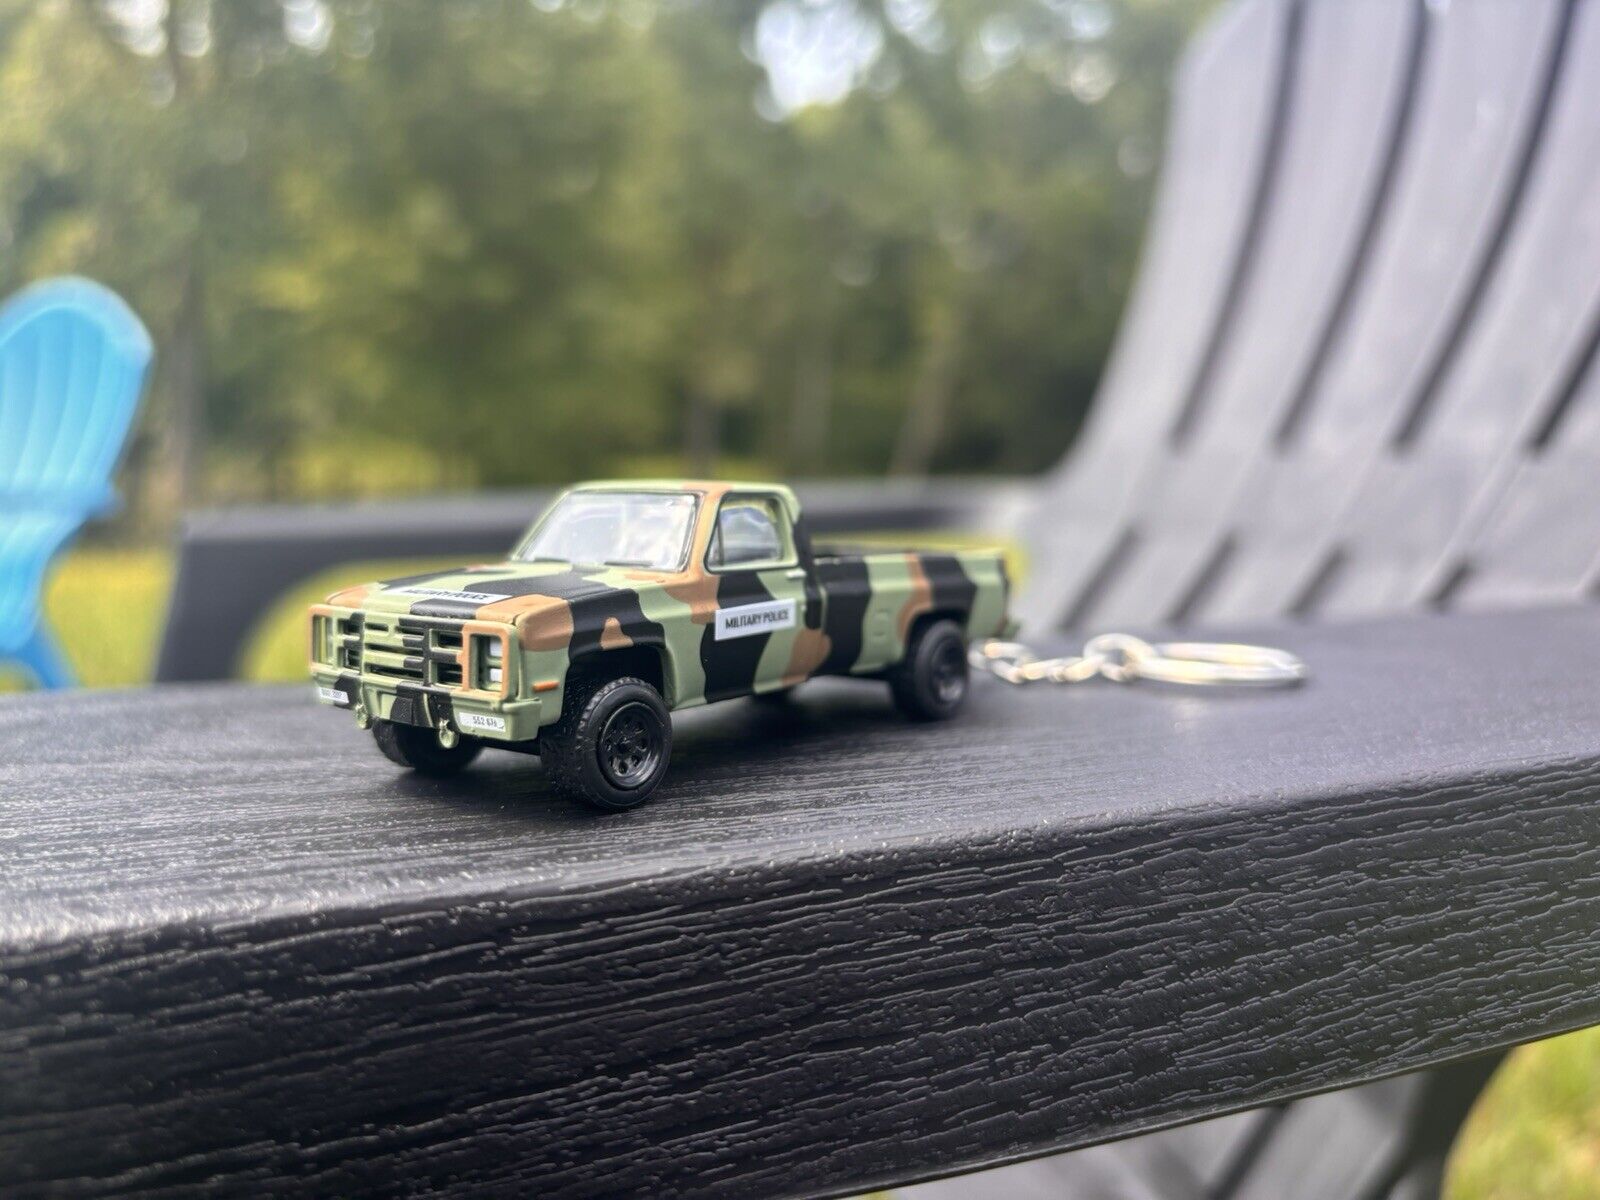 1985 Chevy K10 military Police truck keychain